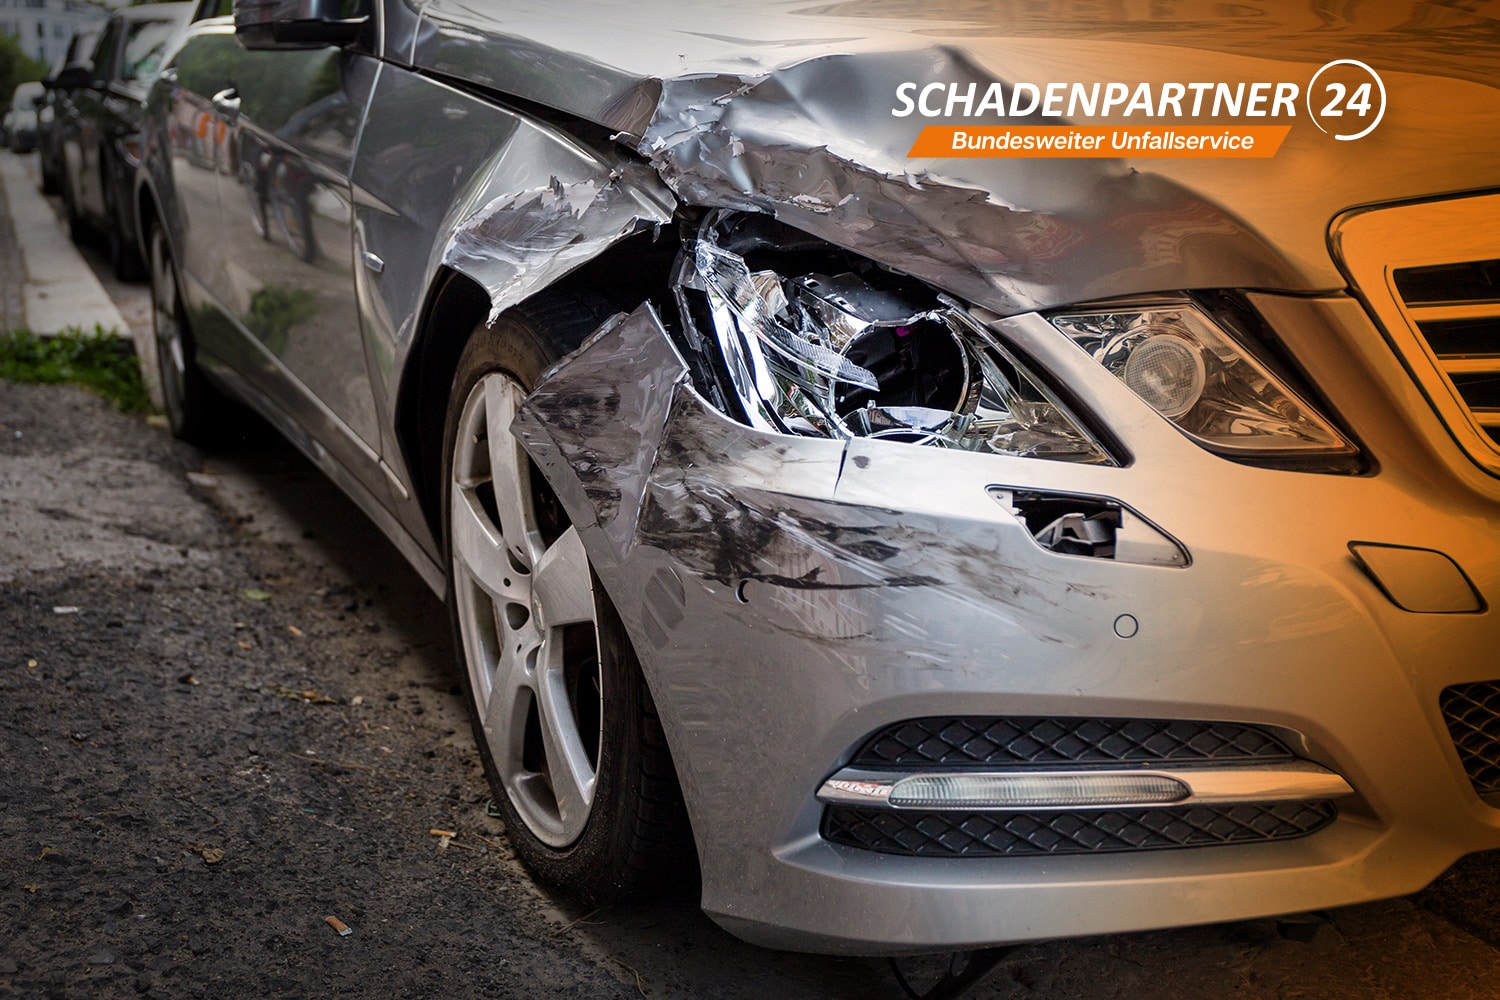 Totalschaden nach Autounfall - Schadenpartner24 hilft